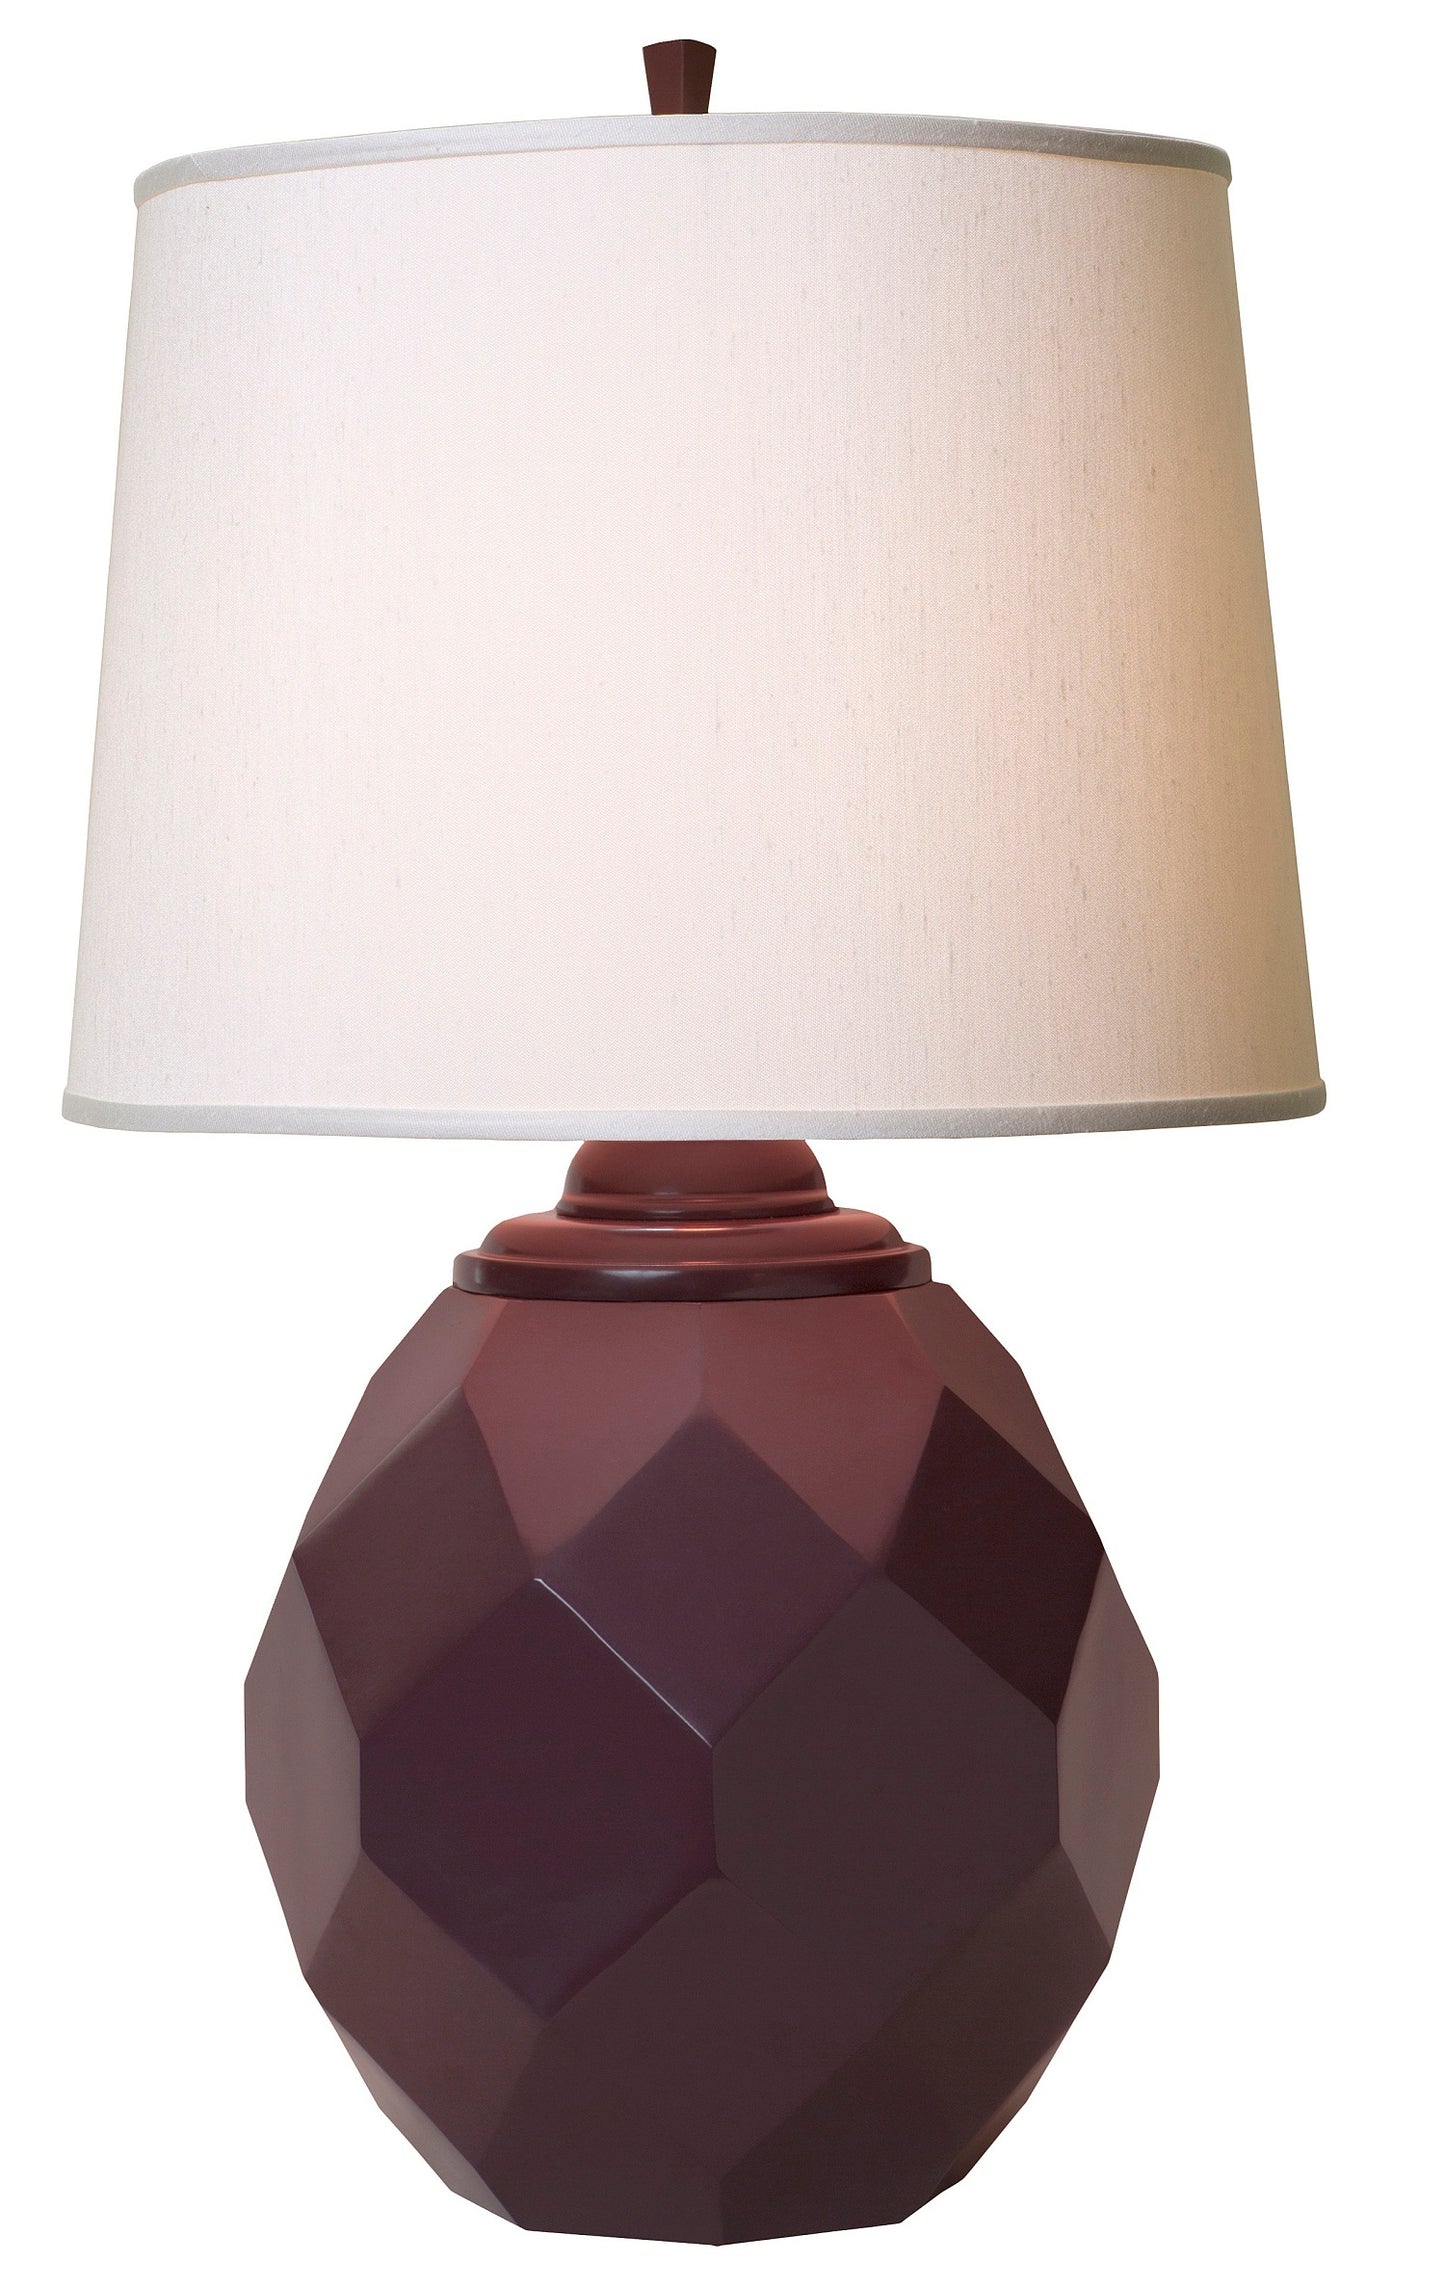 Thumprints Jewel Eggplant Table Lamp 1168-ASL-2124